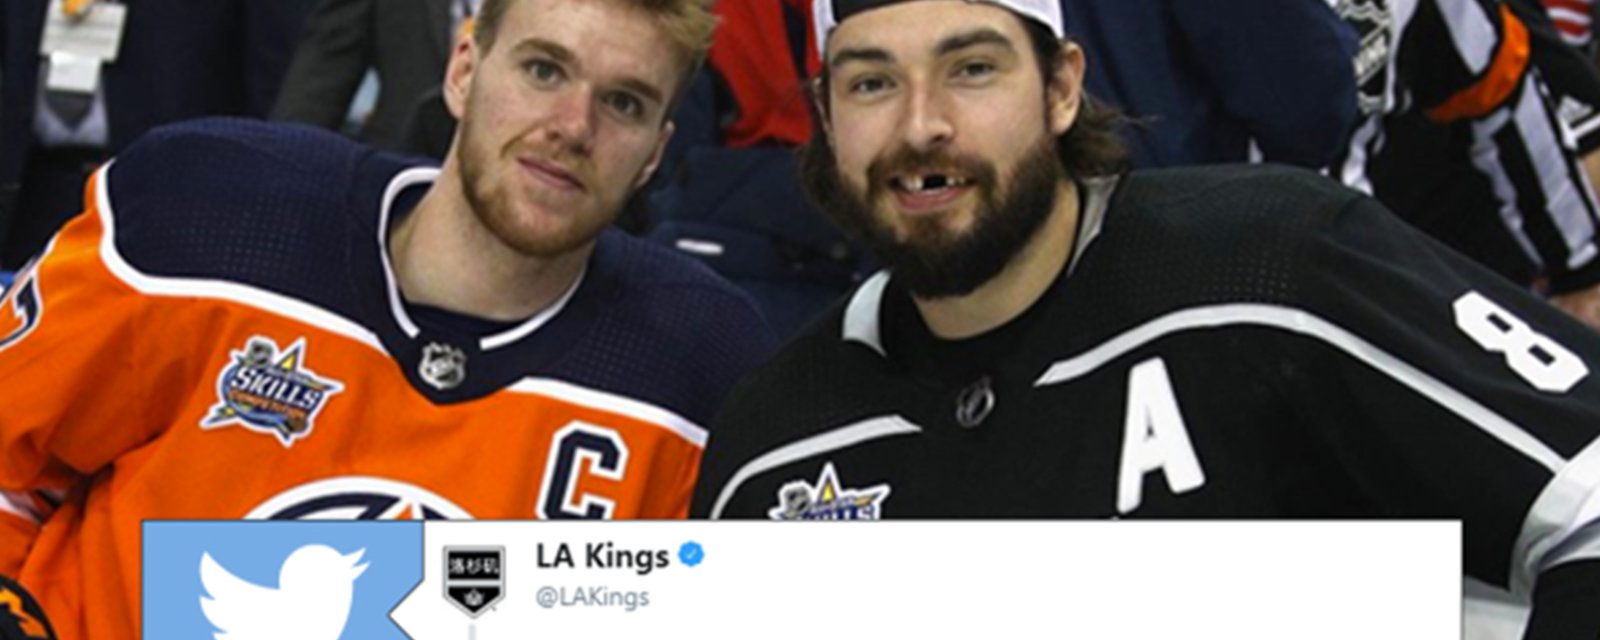 Kings chirp McDavid and Oilers on social media